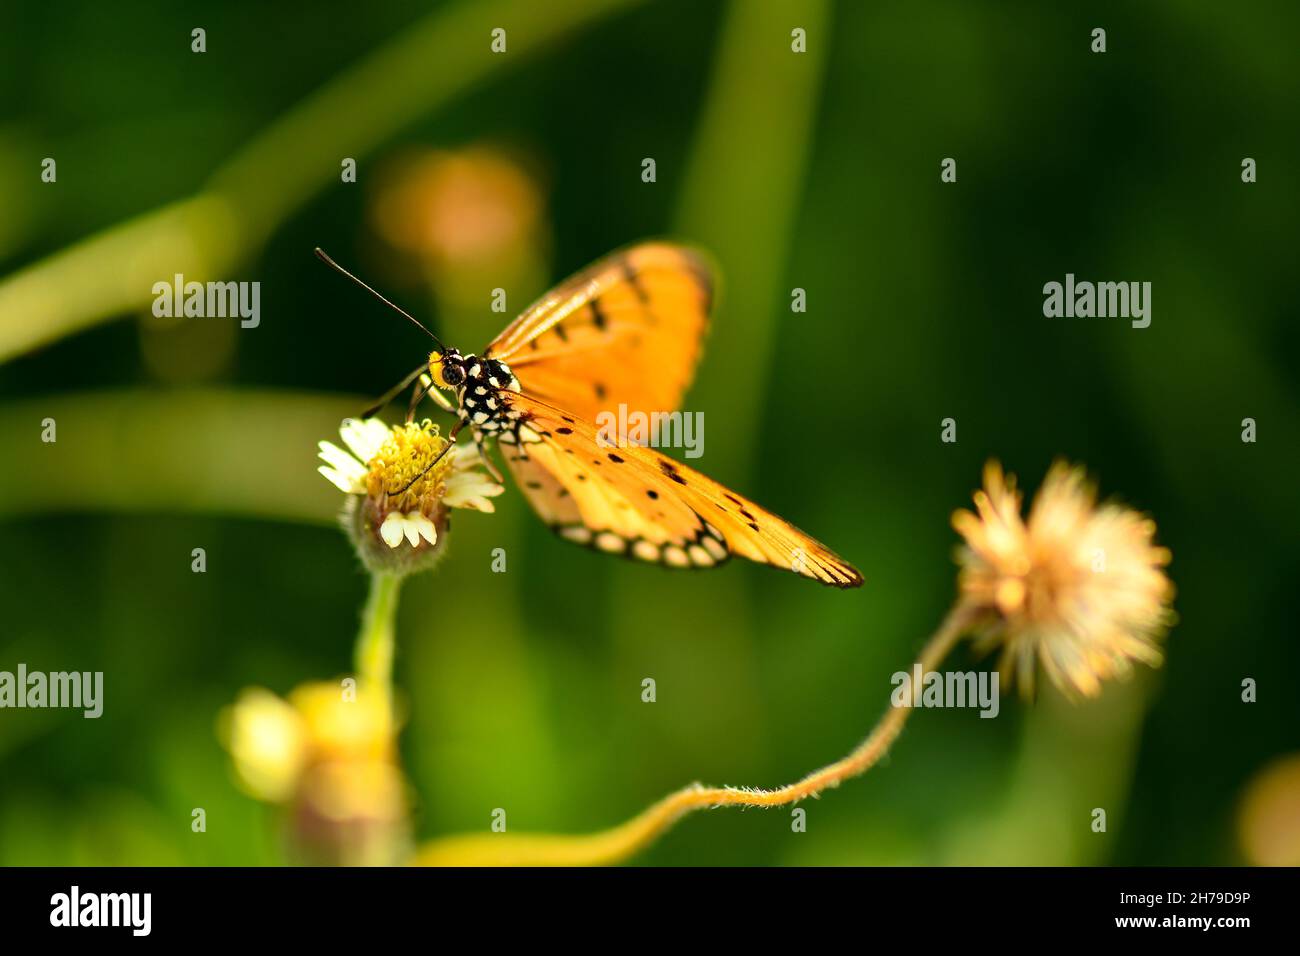 Golden butterfly landing on small white flower during summer Stock Photo